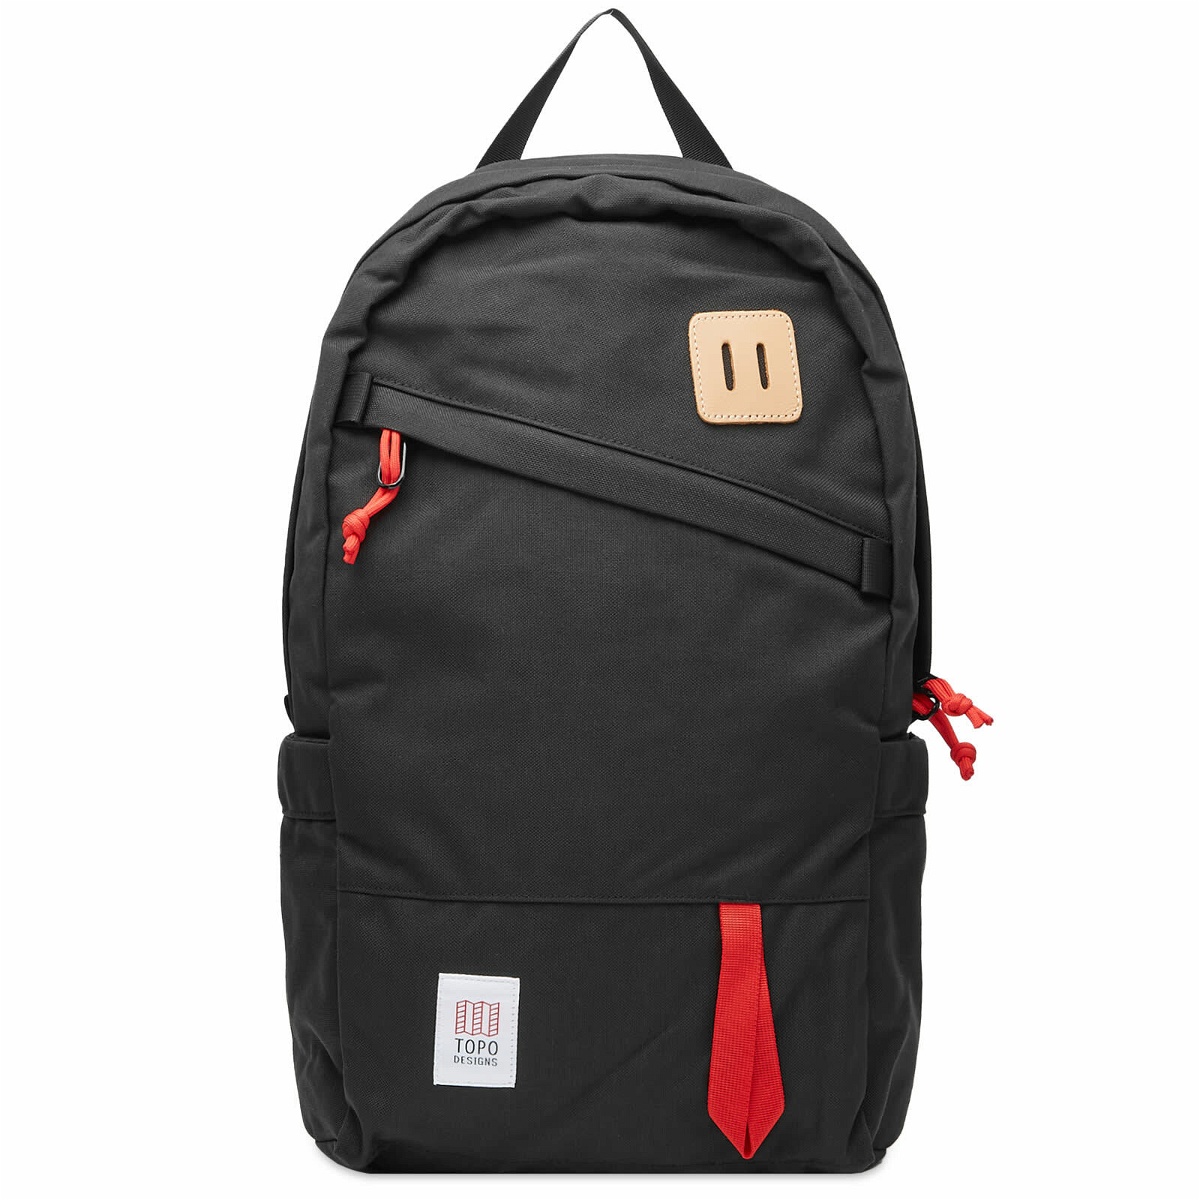 Topo Designs Daypack Classic Backpack in Black Topo Designs